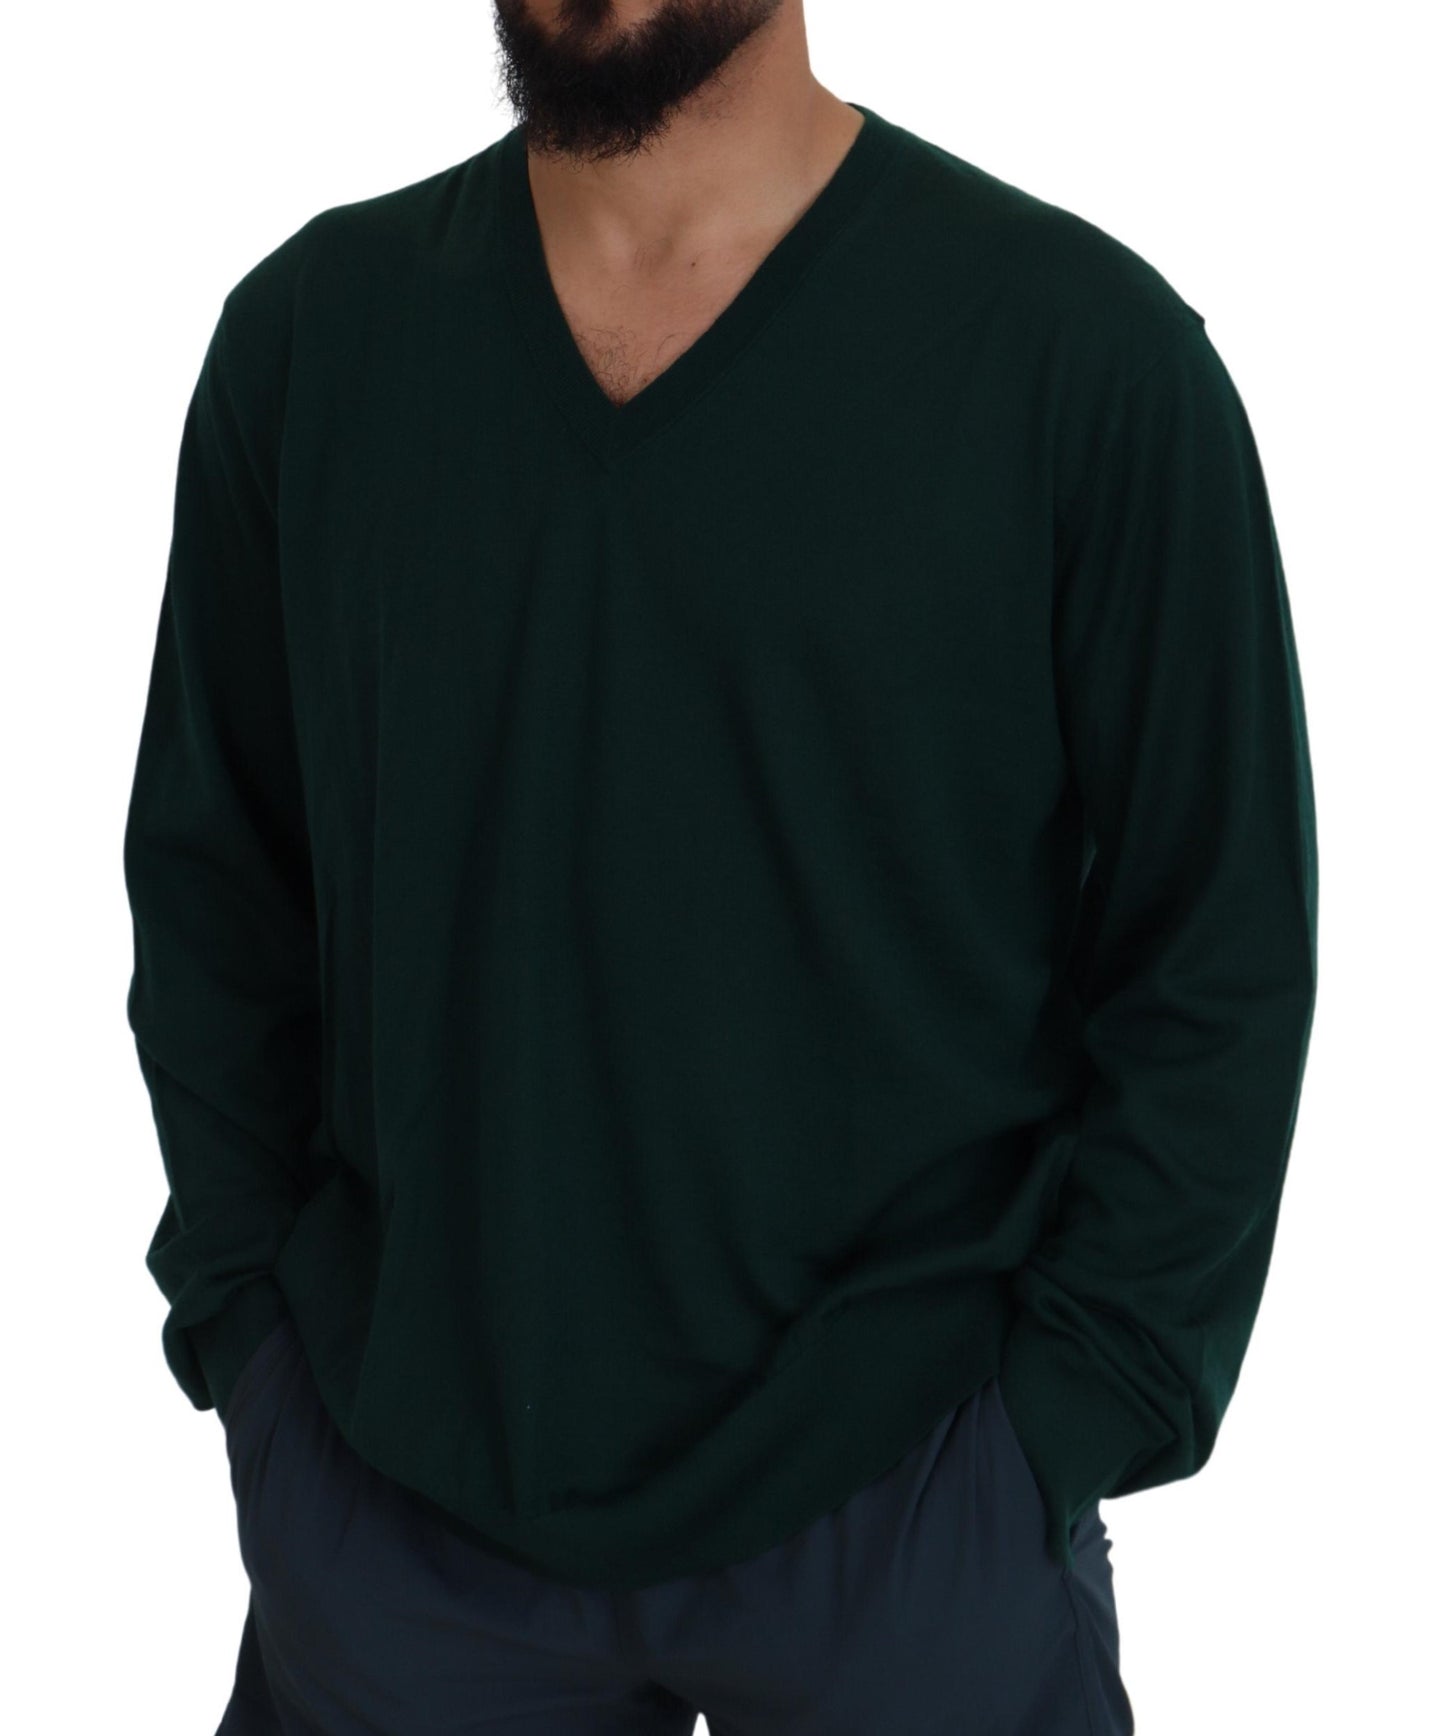 Elegant Green V-Neck Cashmere Sweater